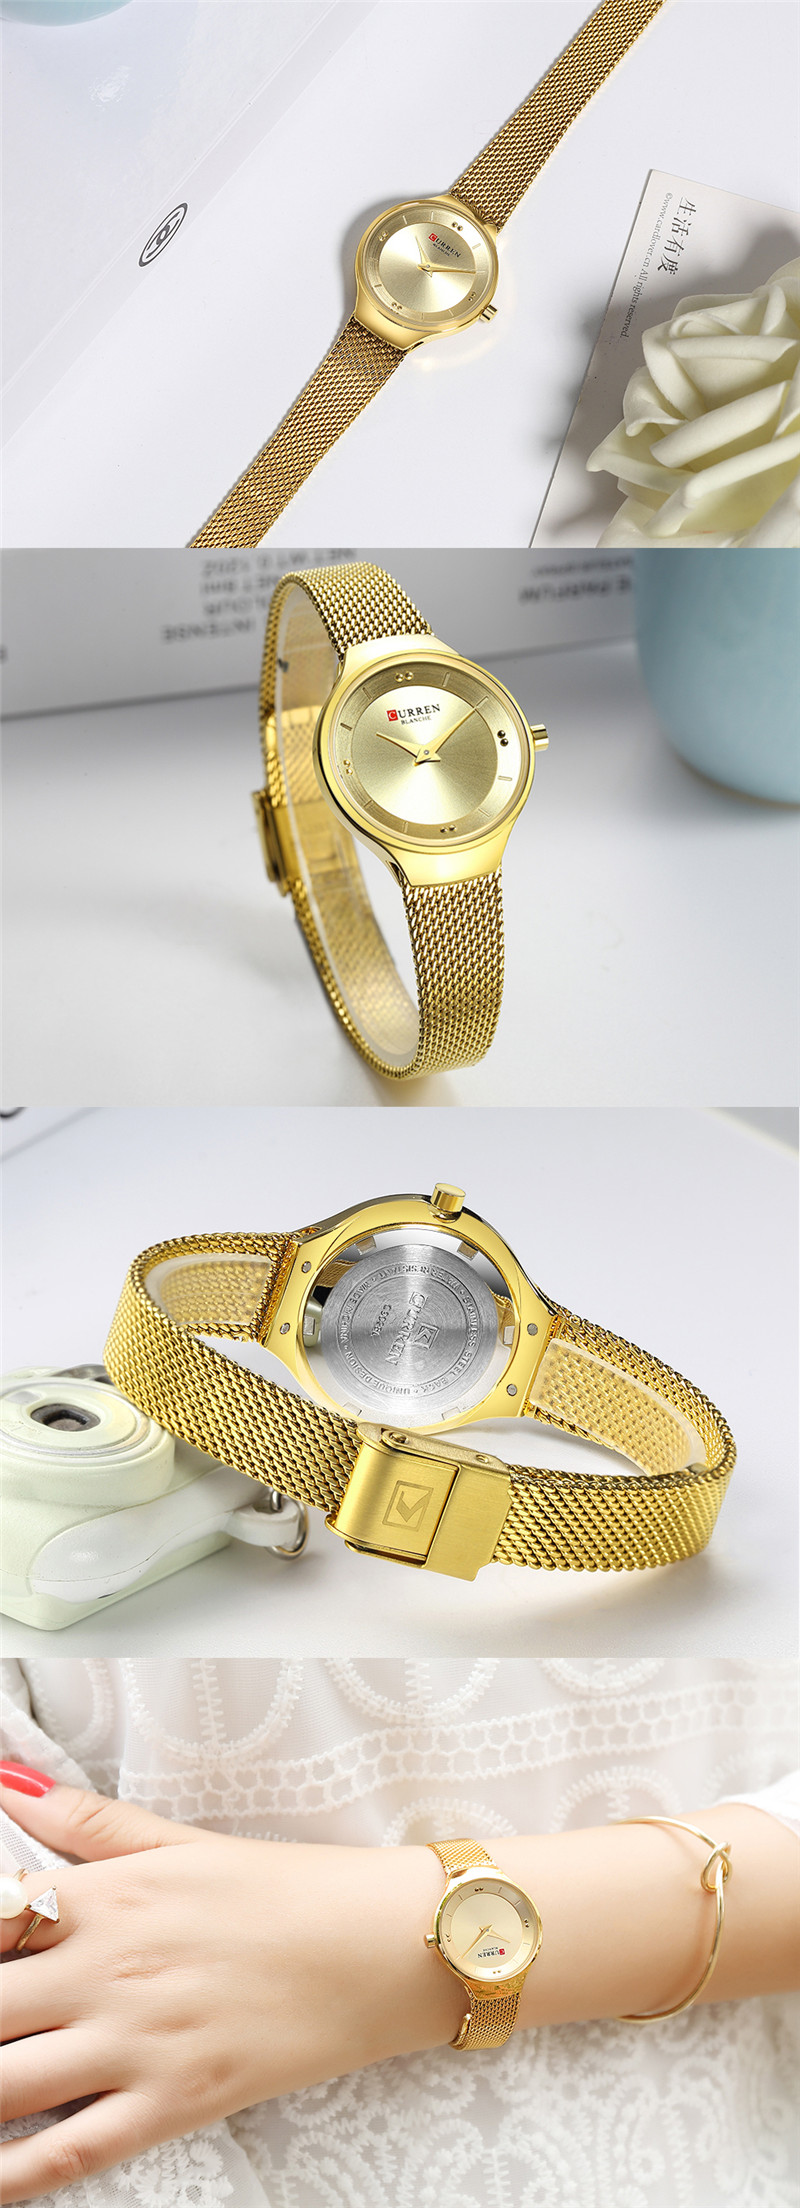 CURREN 9028 women's quartz watch bracelet watches